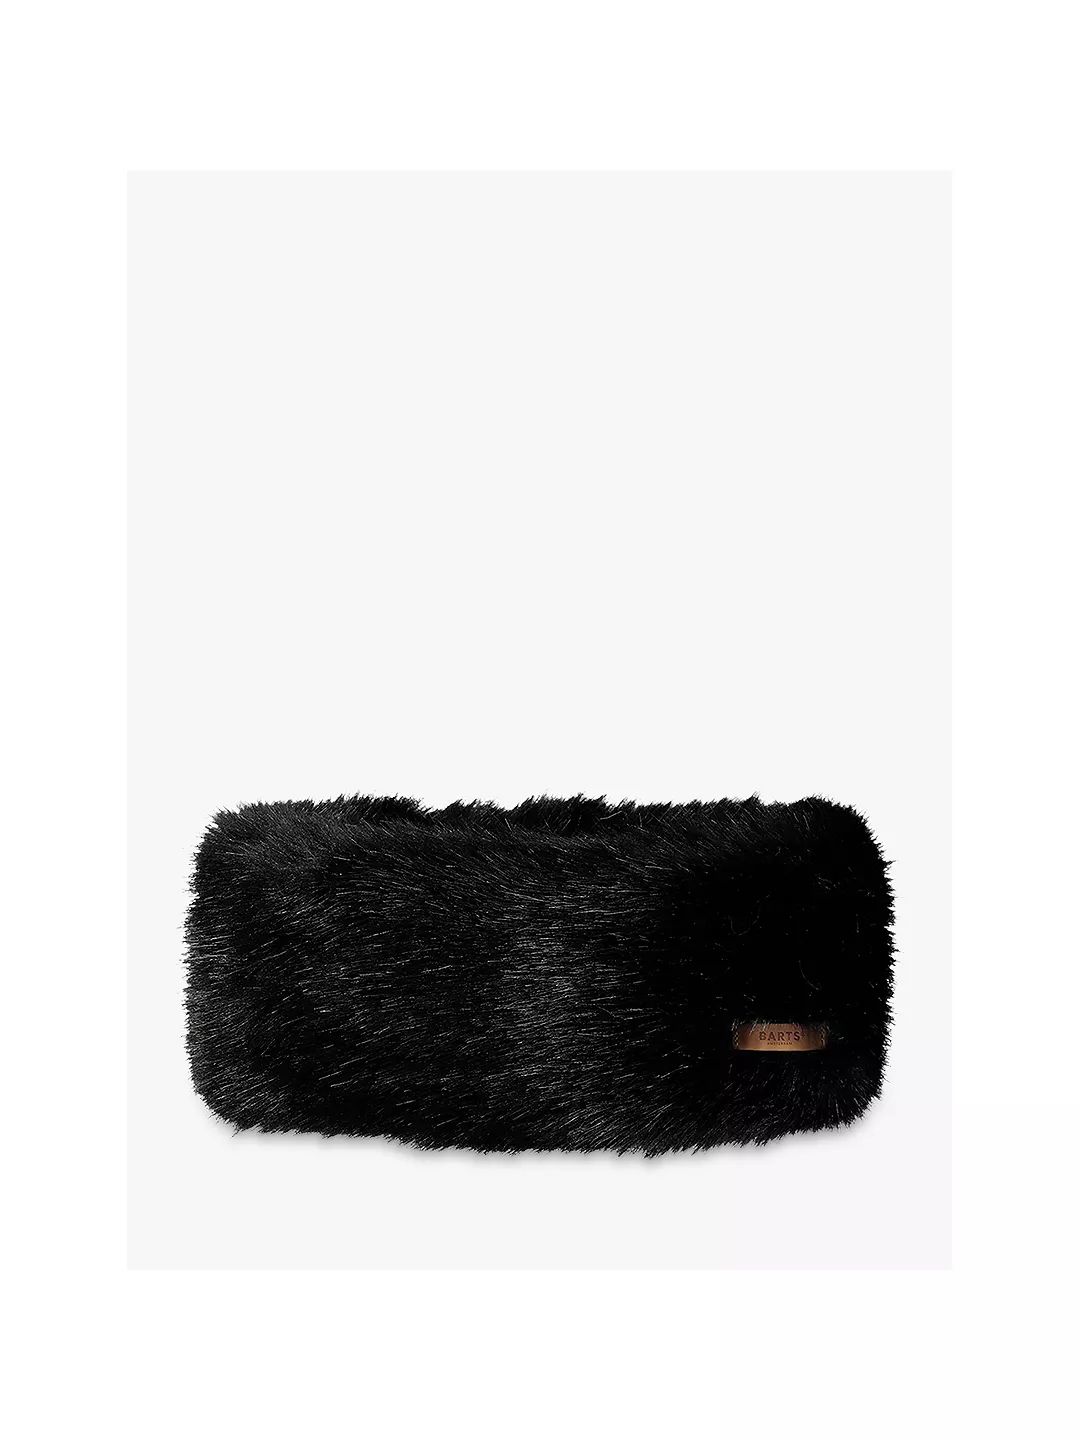 Barts Fur Headband, Black | John Lewis (UK)